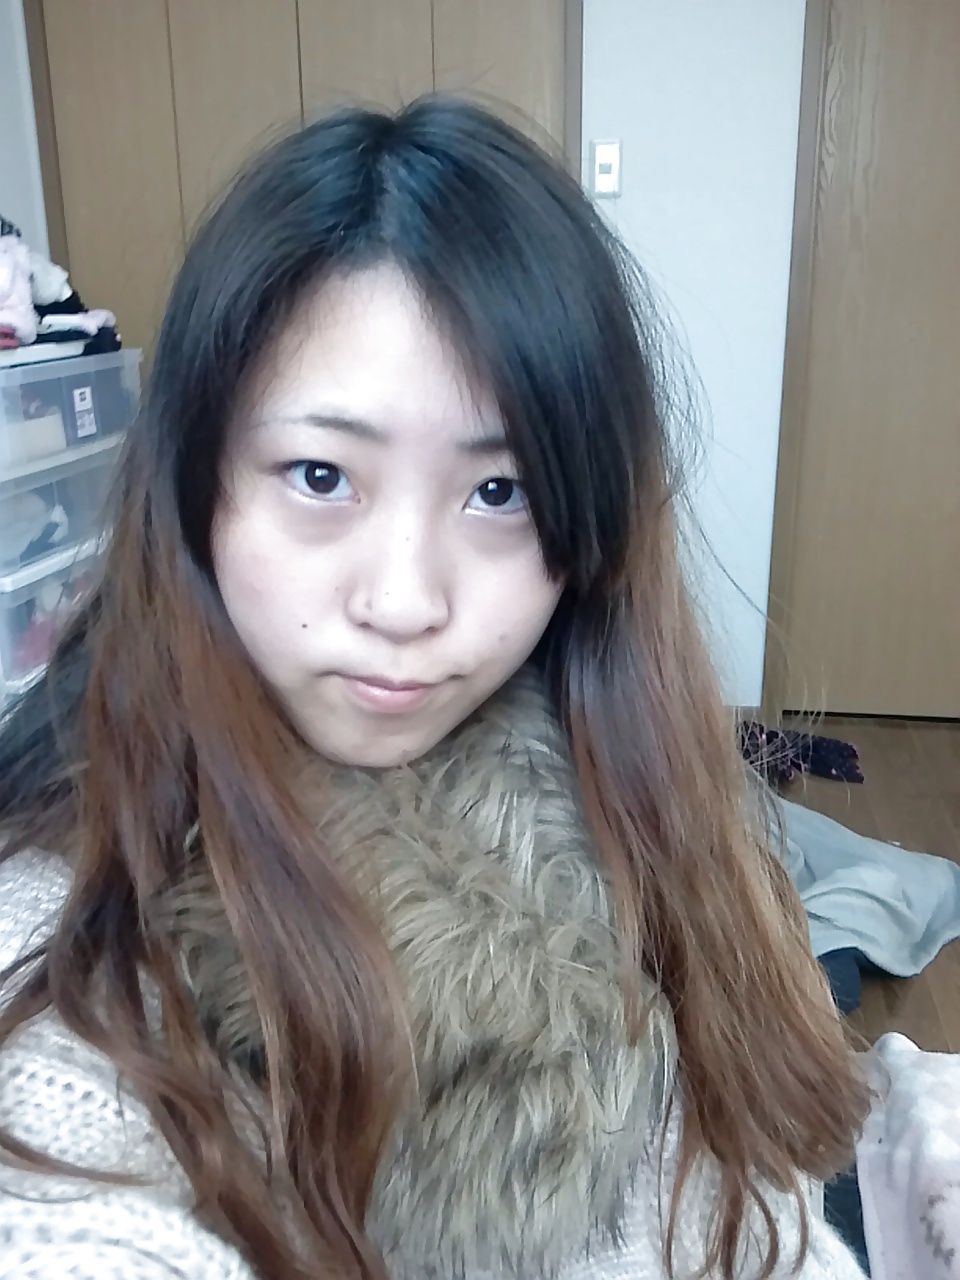 Super Nette Japanische Mädchen Nackt Selfies #26438326